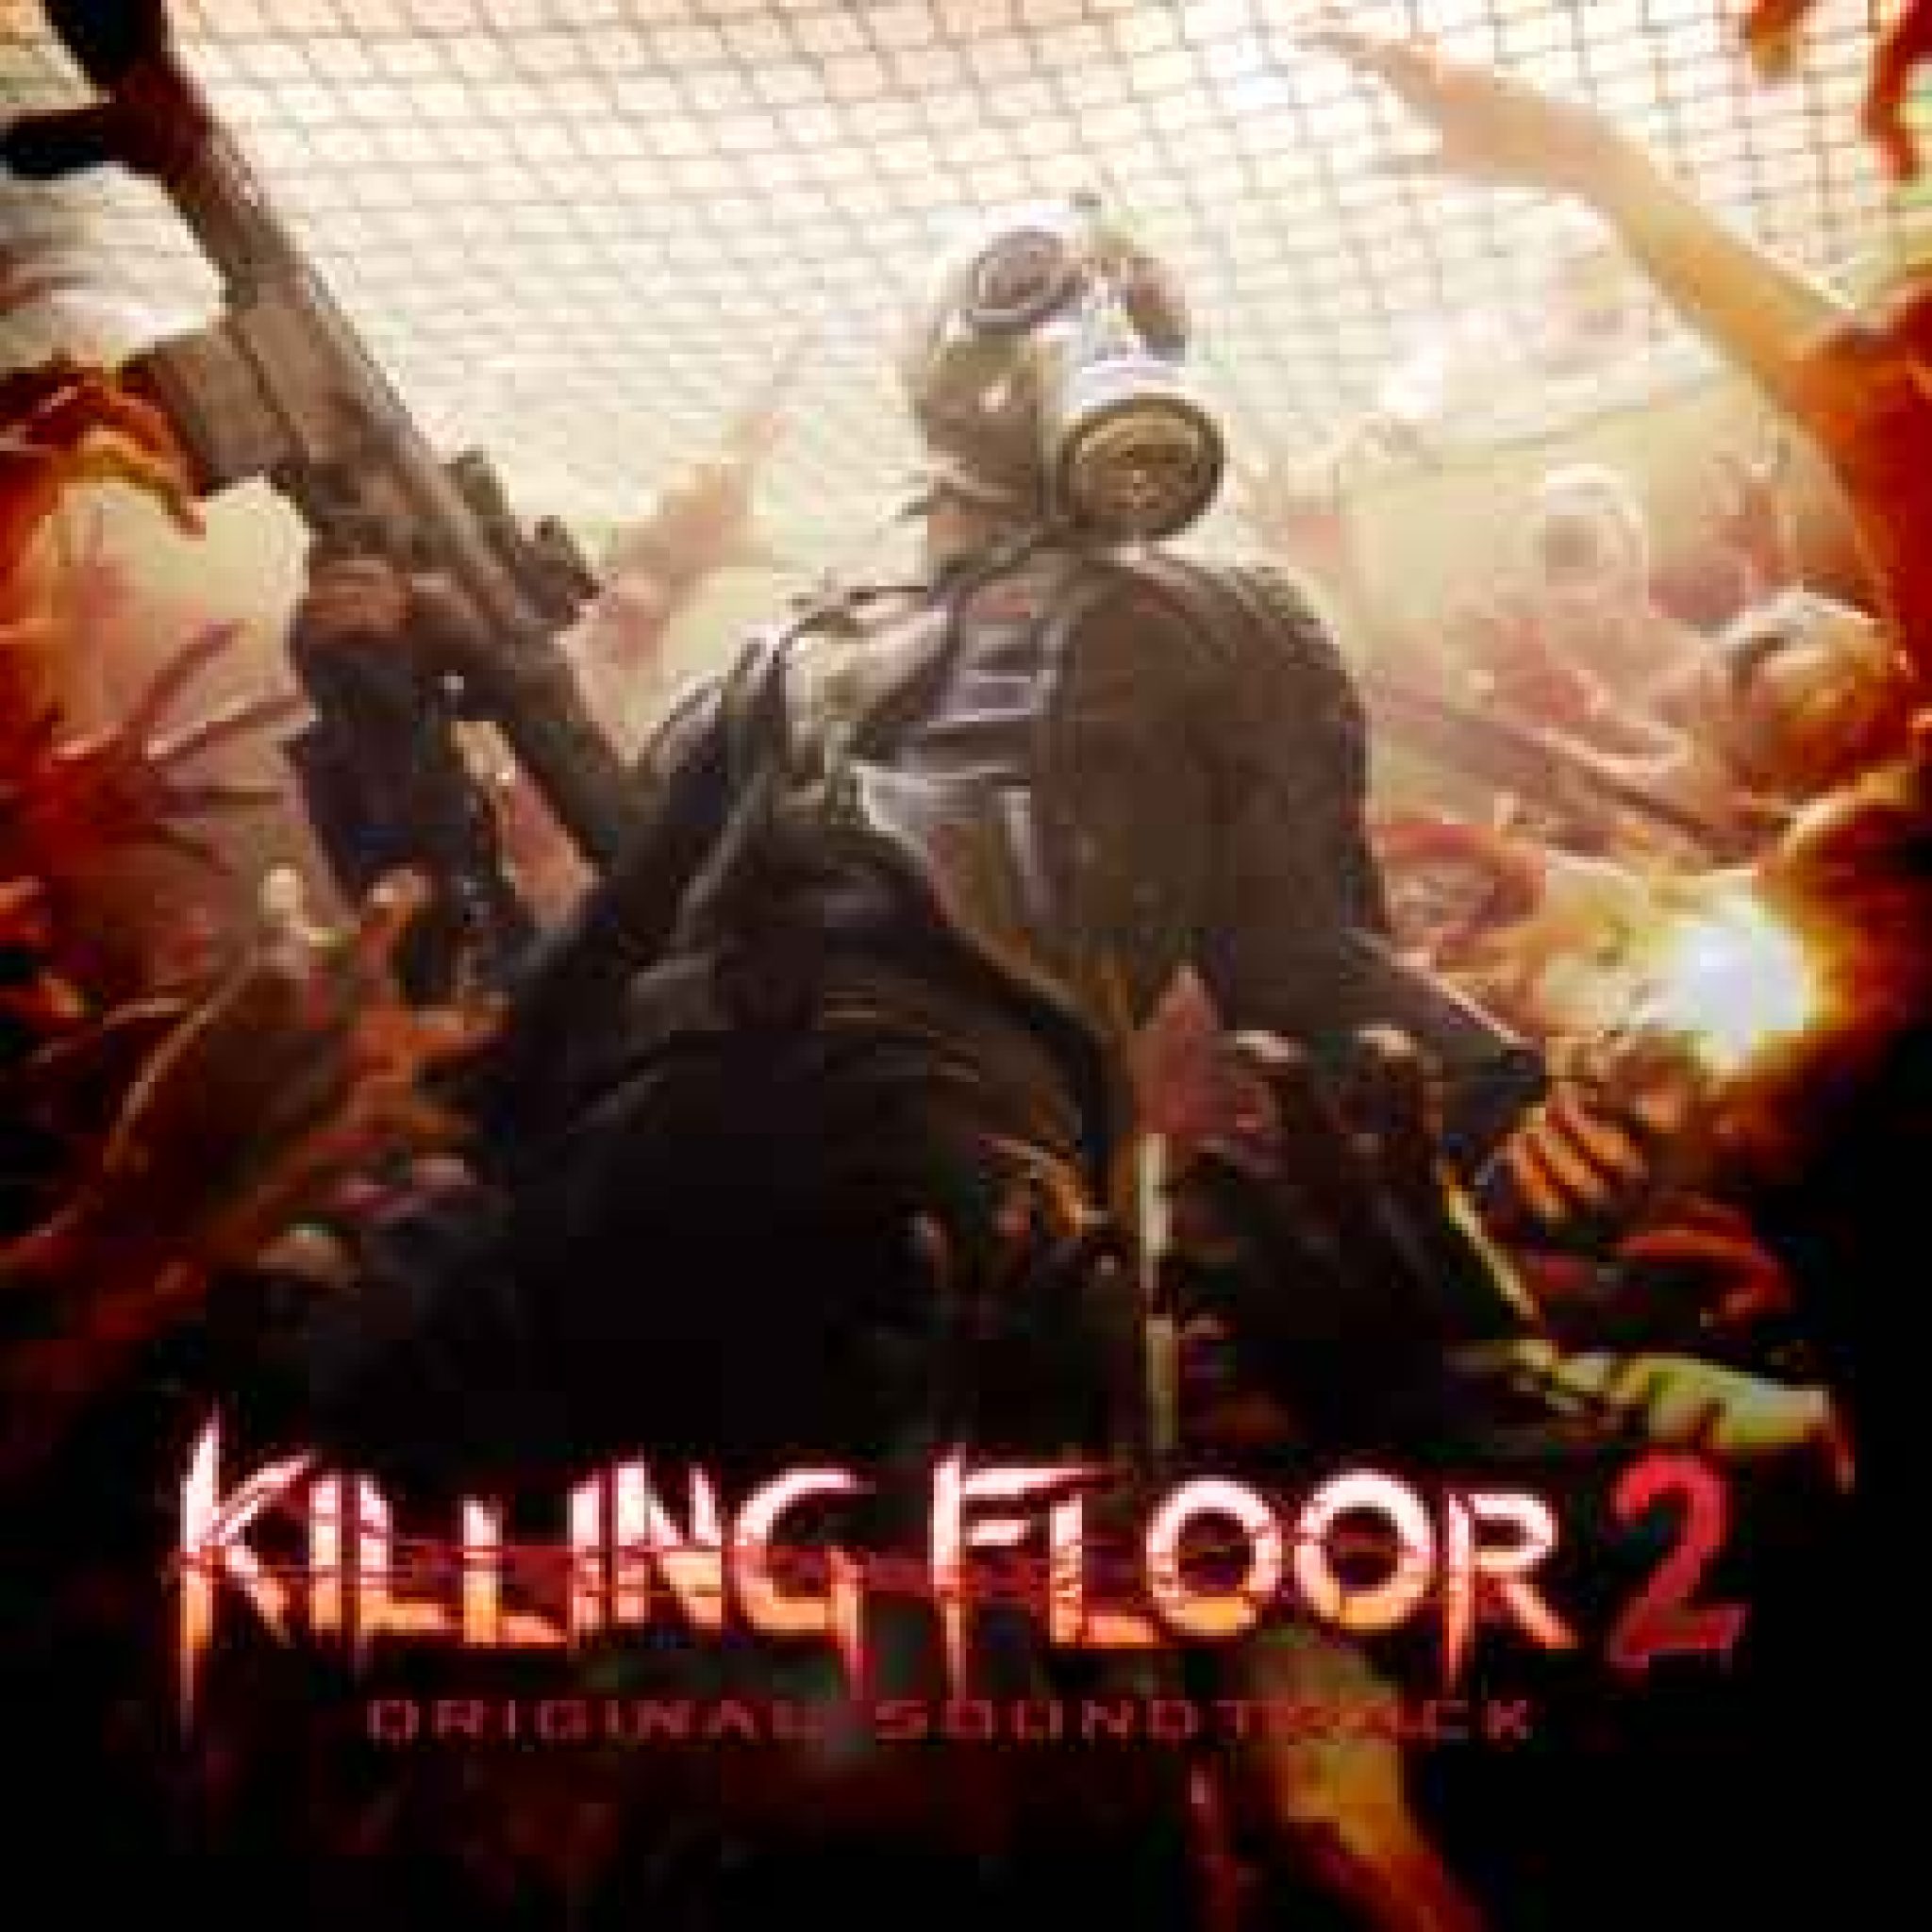 killing floor 2 error opening file